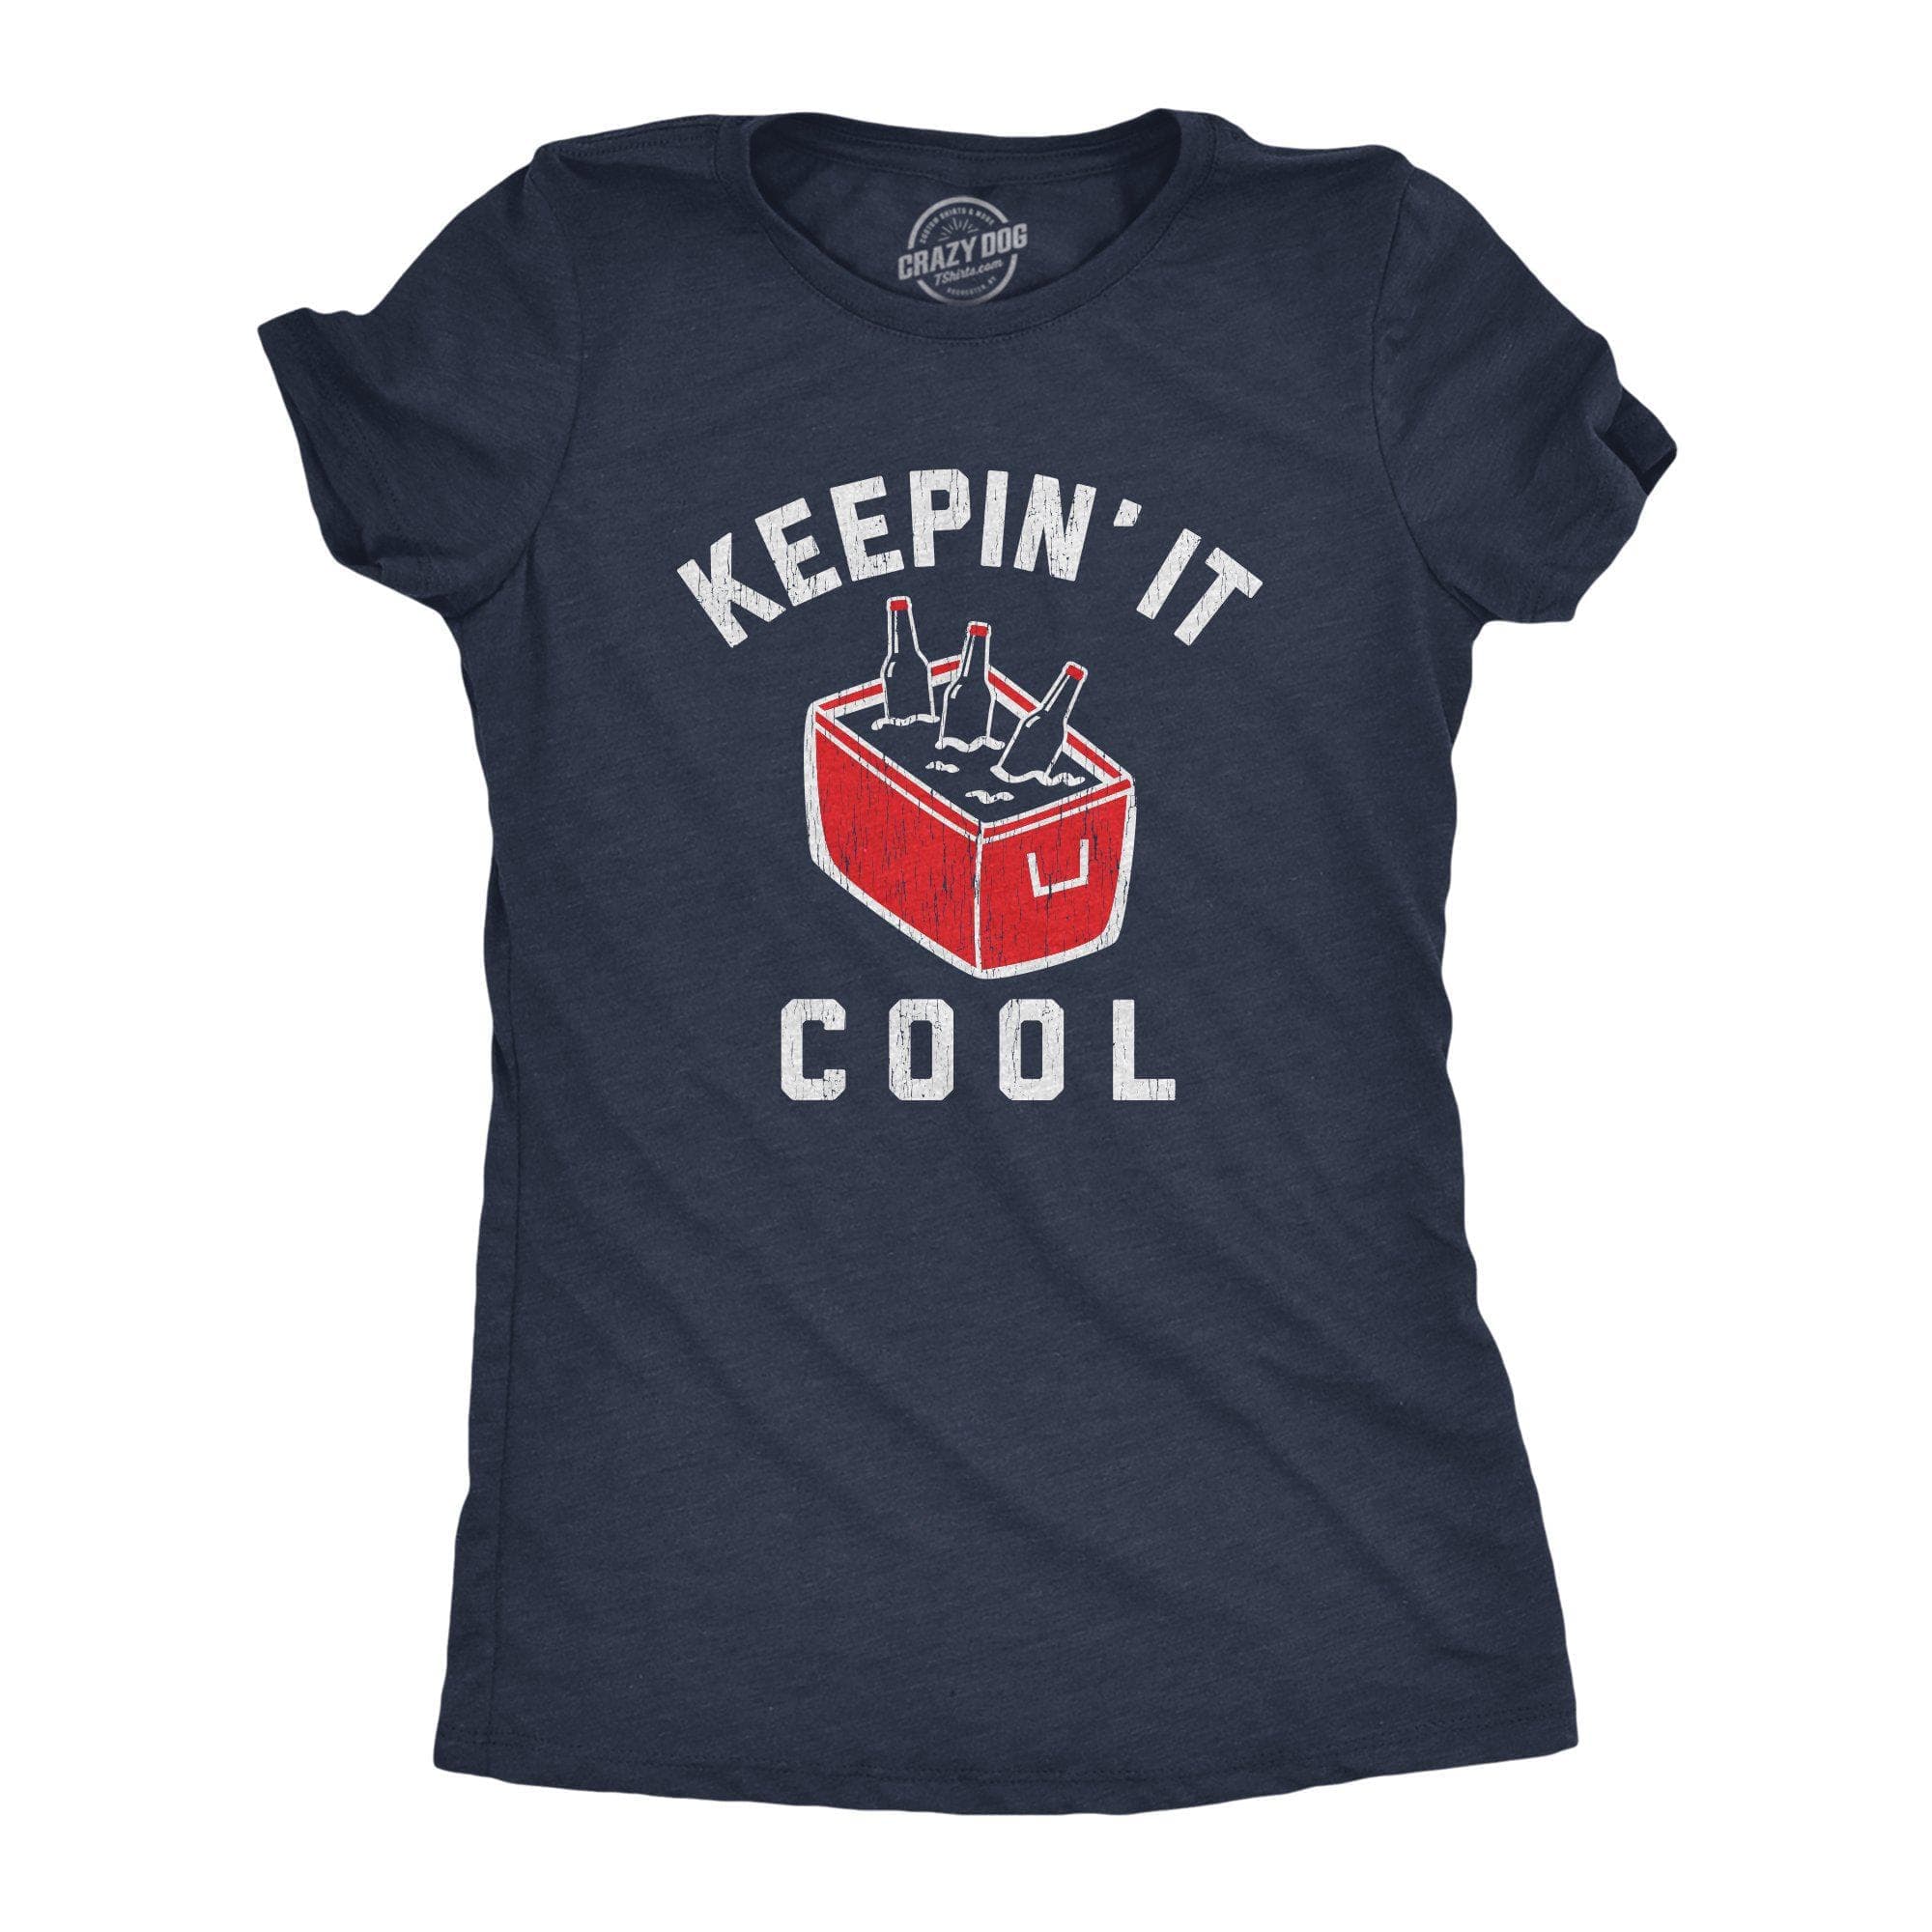 Keepin' It Cool Women's Tshirt - Crazy Dog T-Shirts